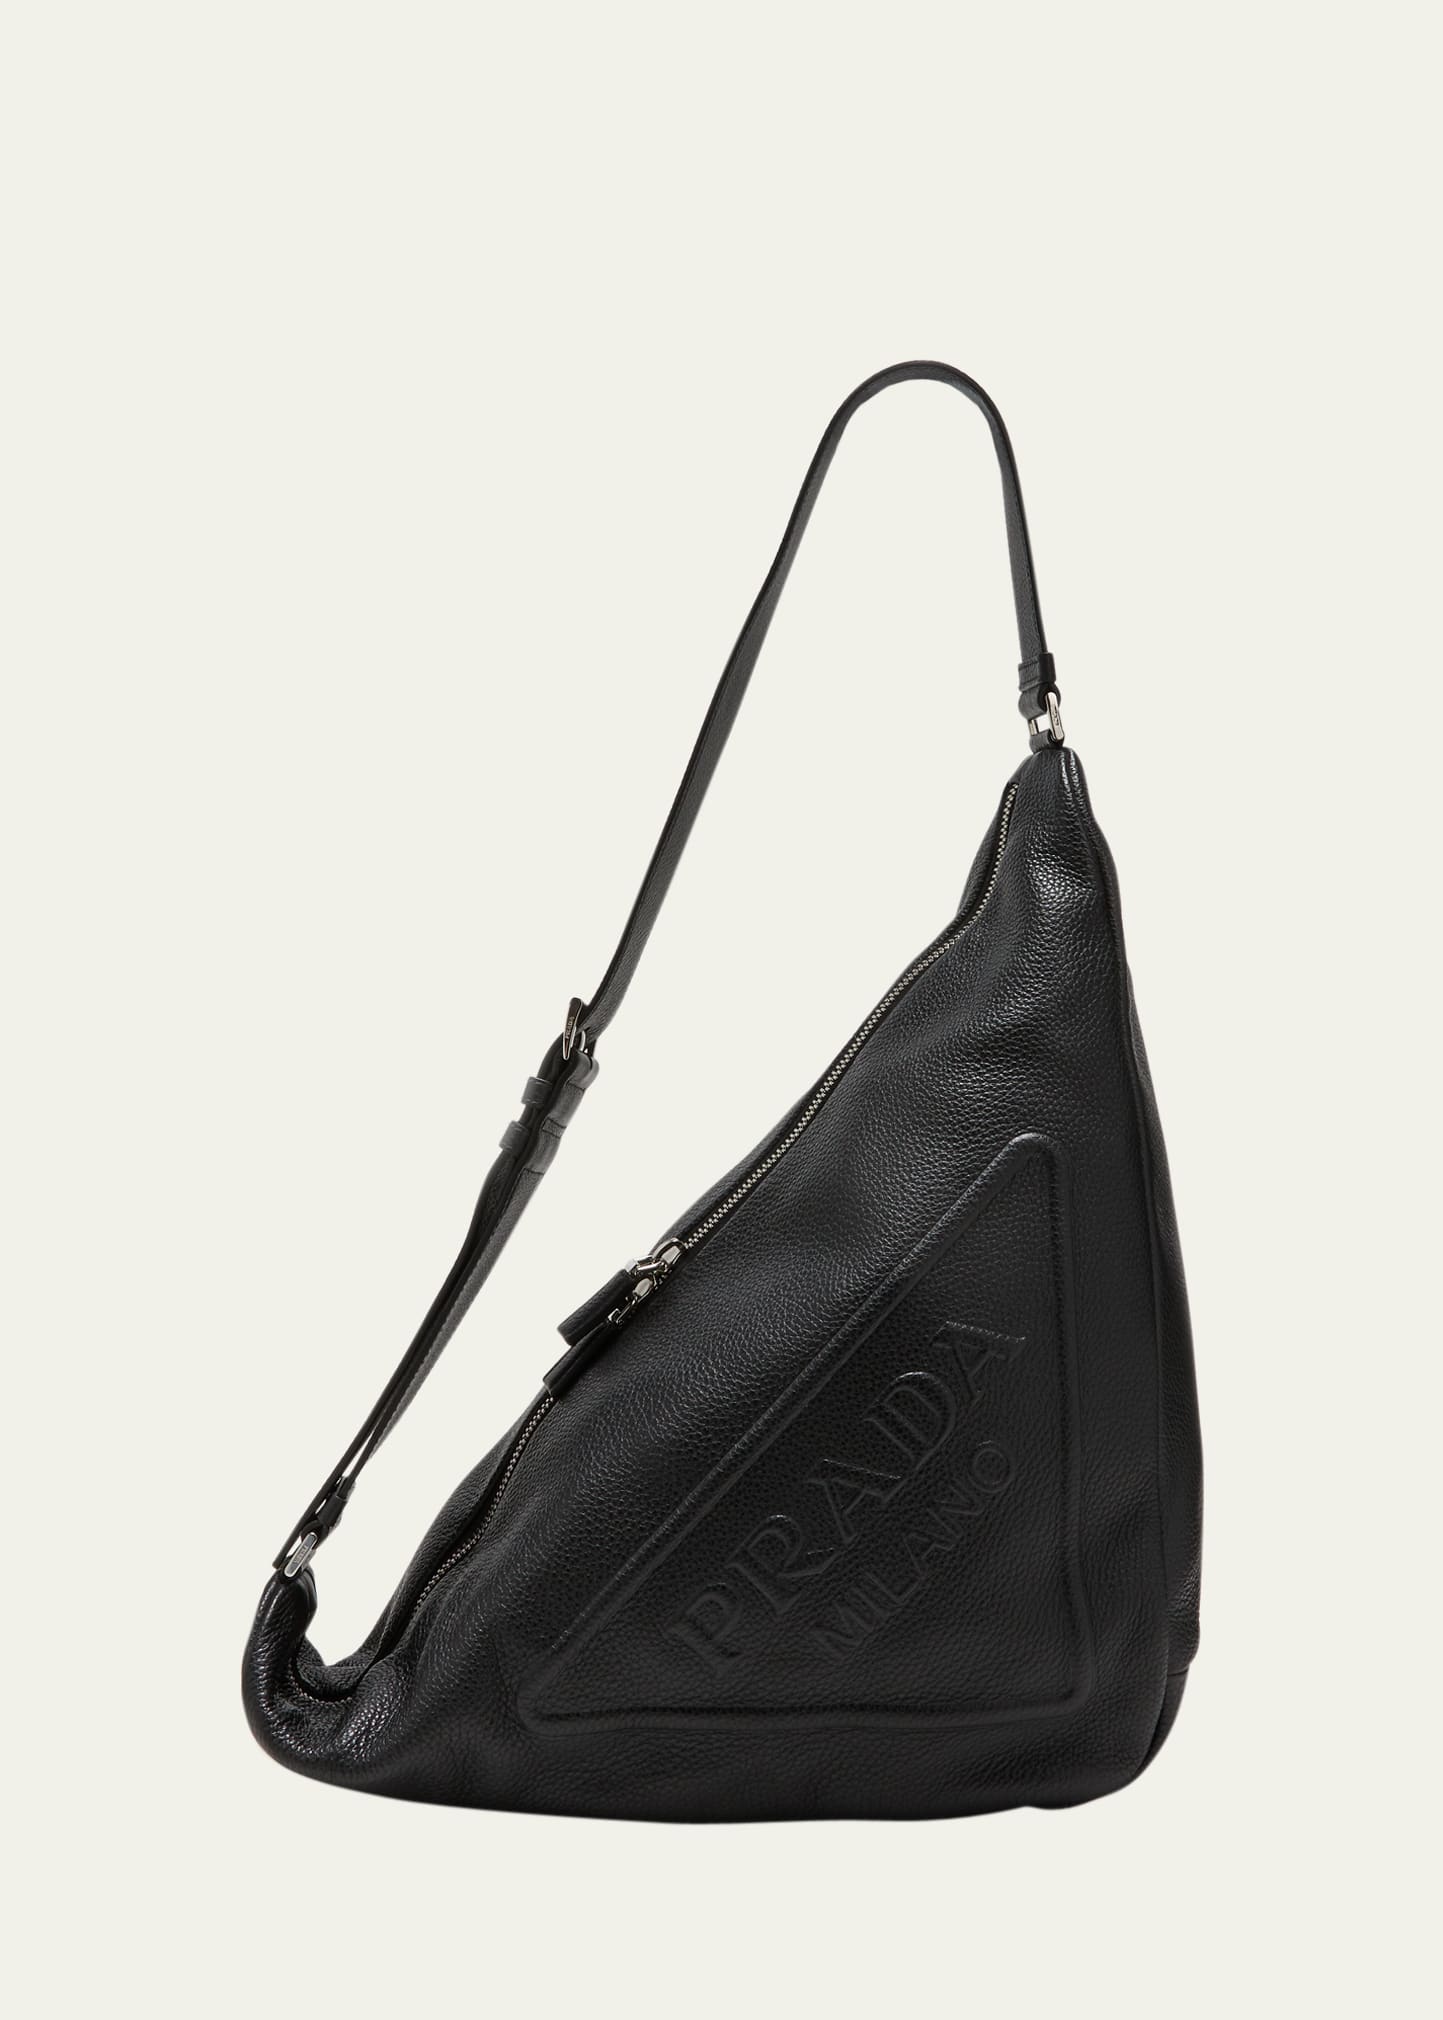 Prada Men's Triangle Leather Shoulder Bag In Nero